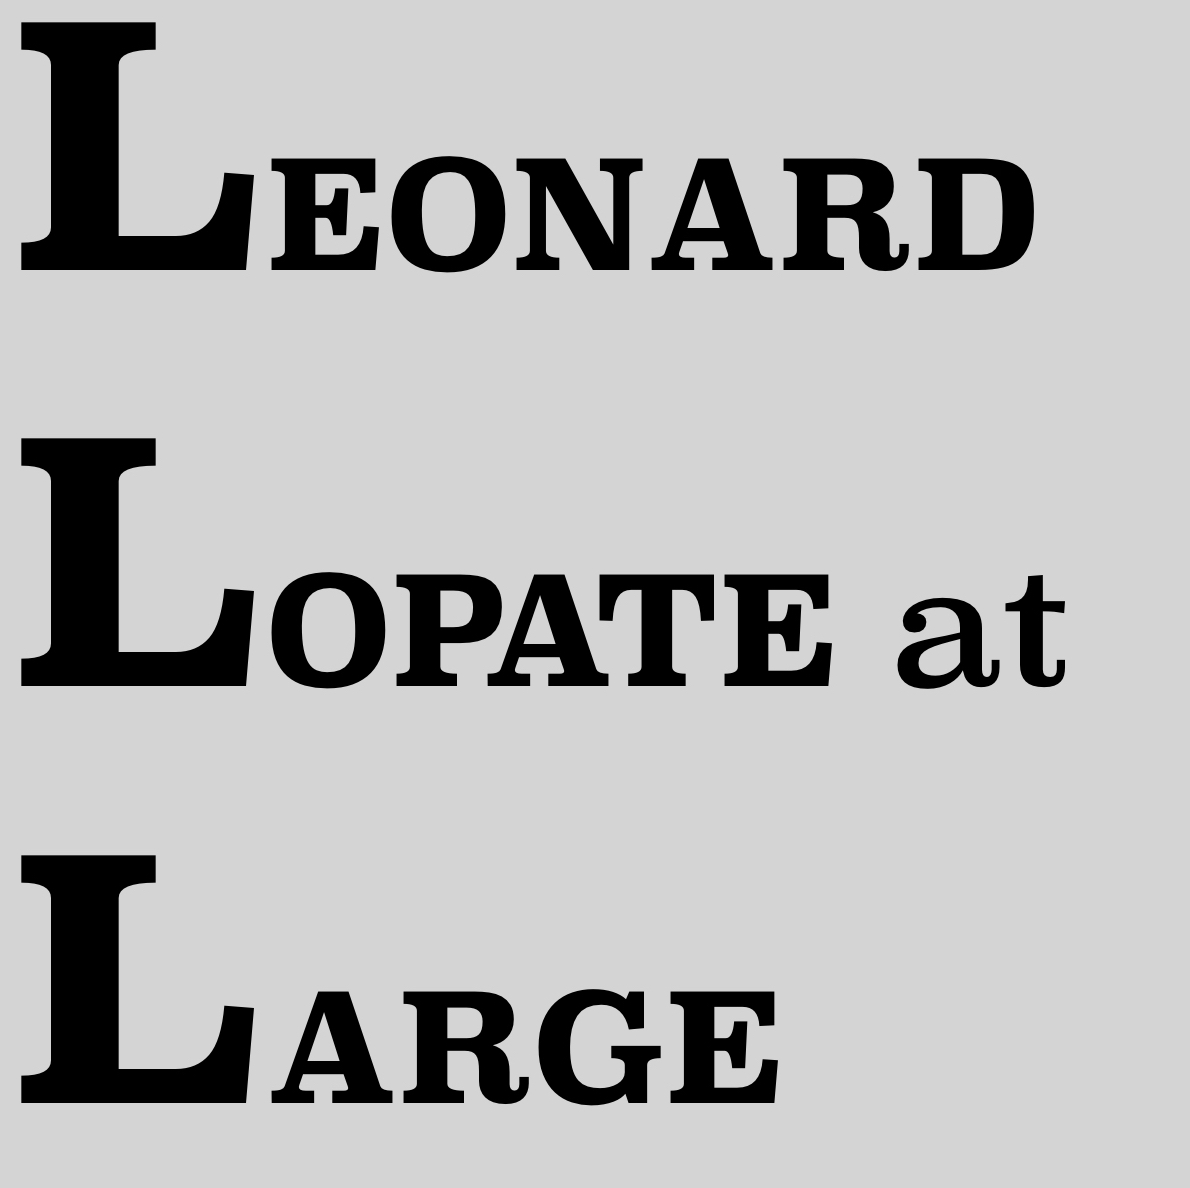 Leonard Lopati at Large logo